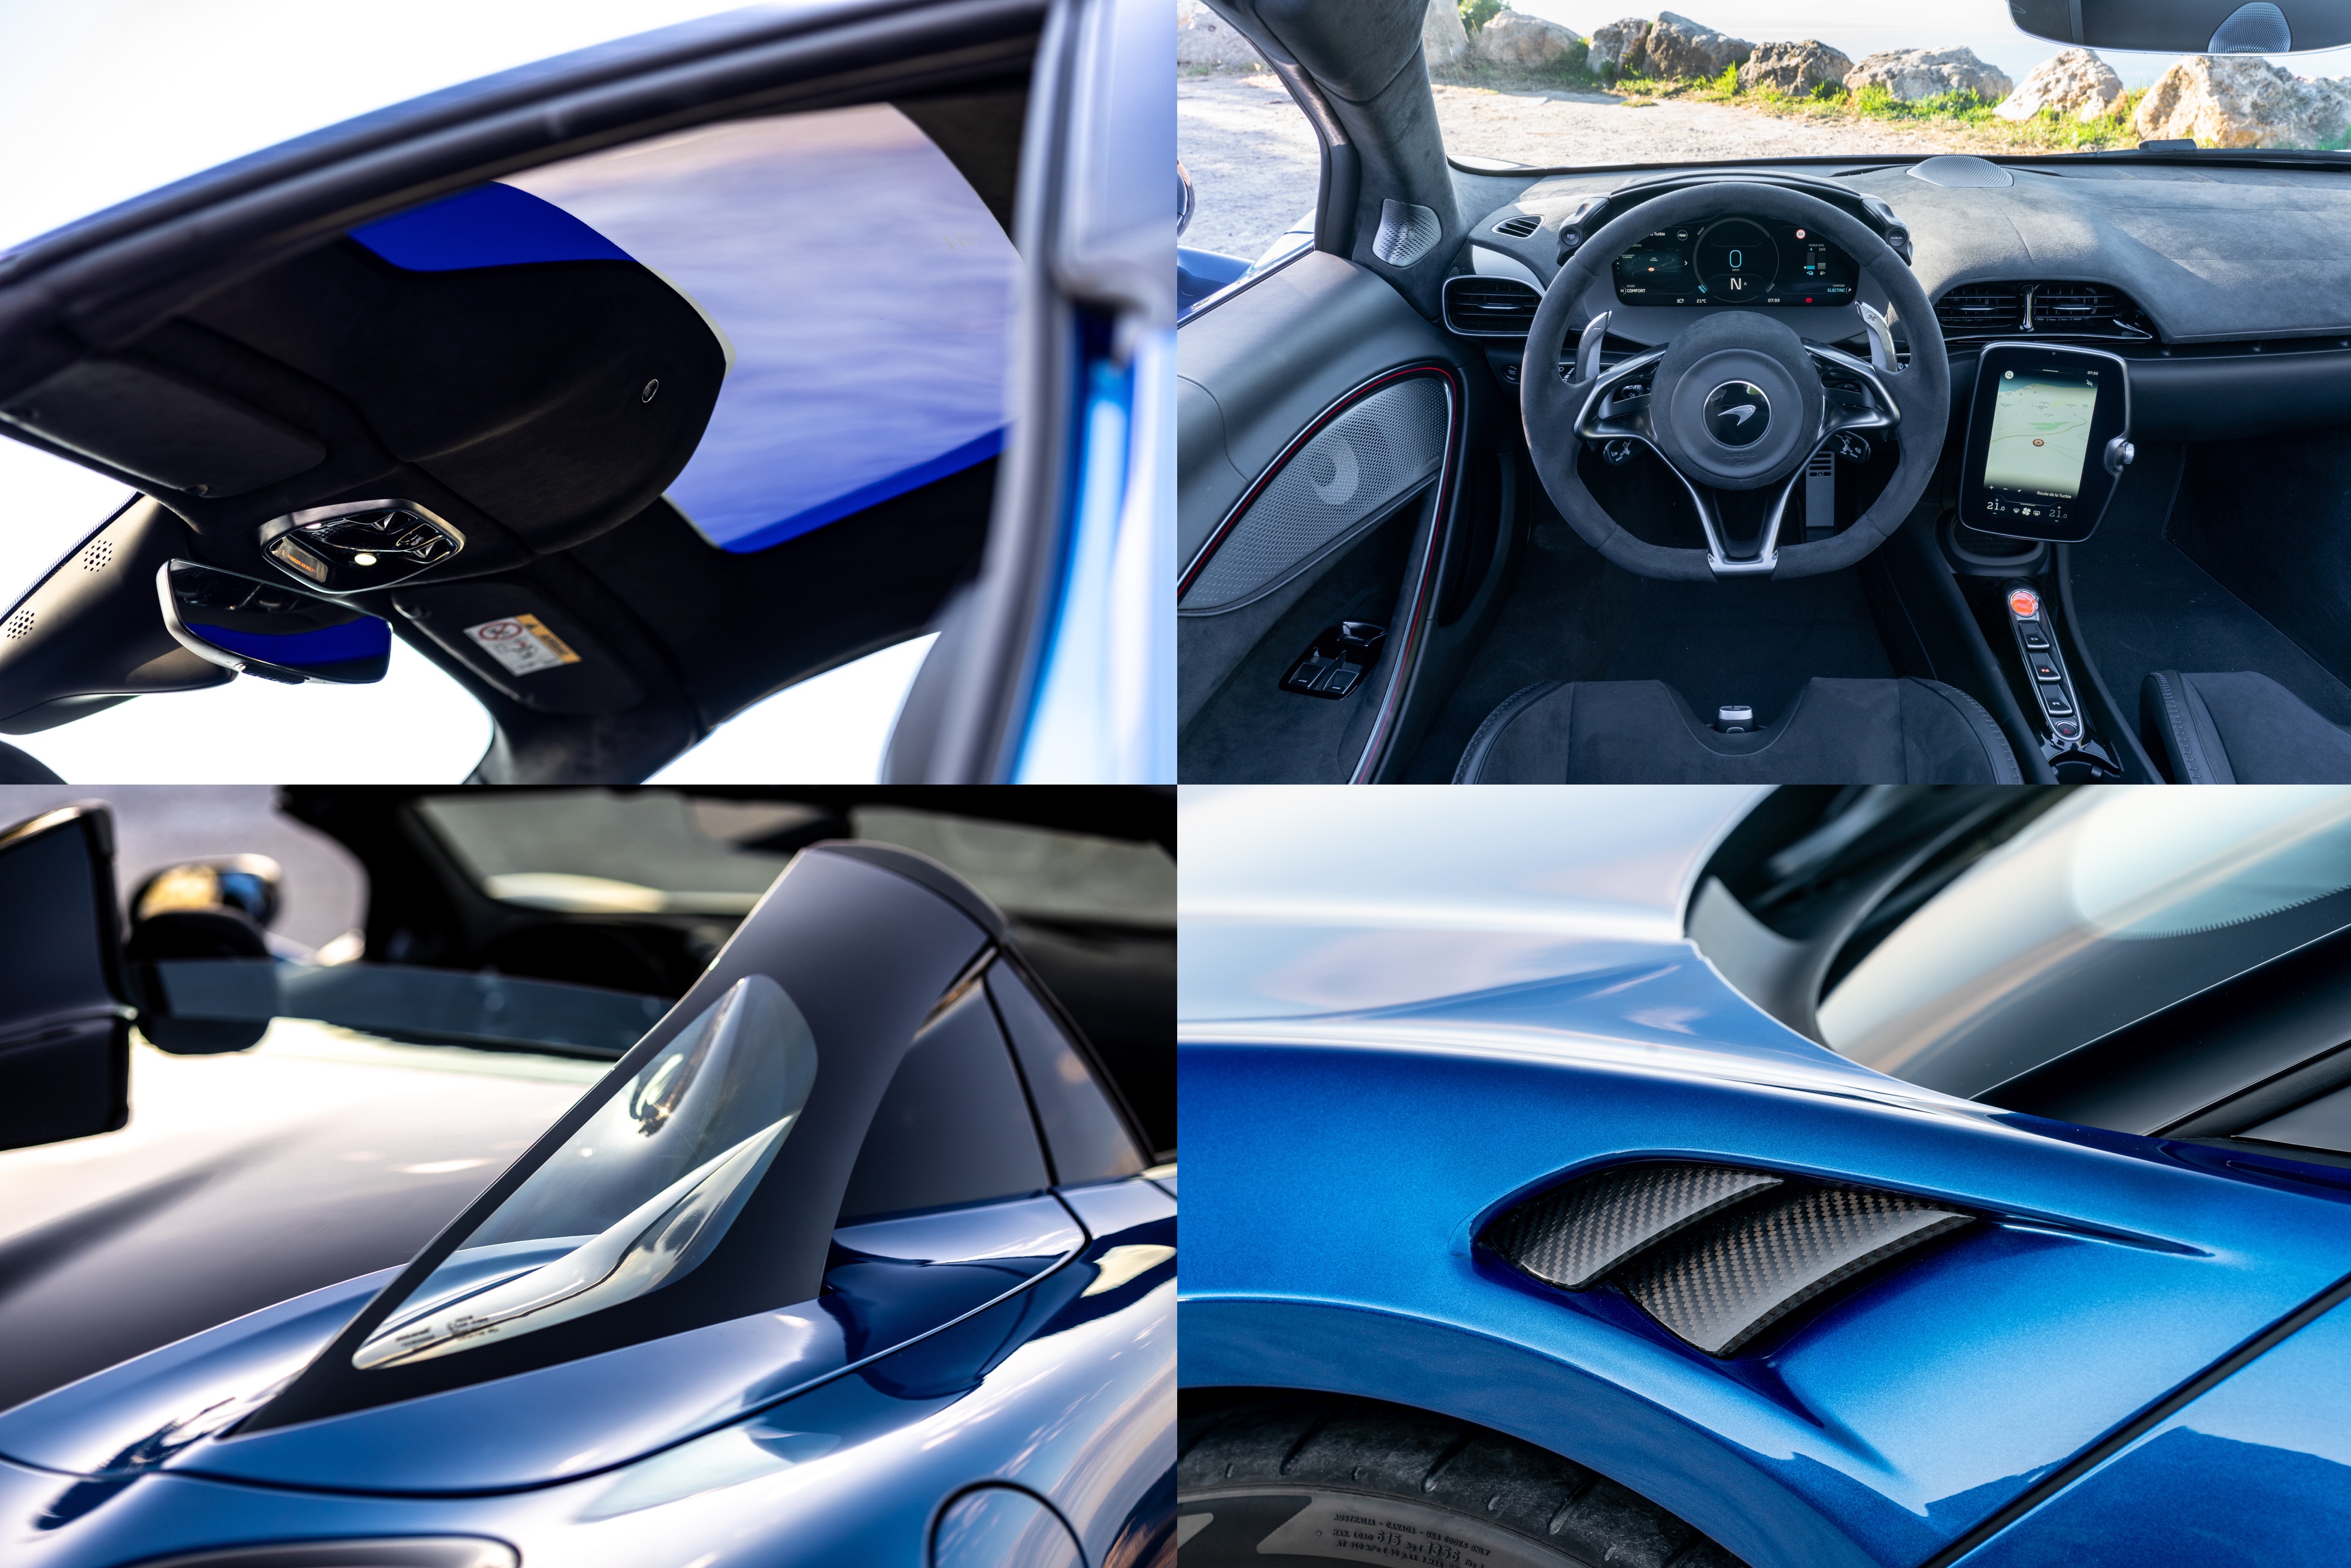 details of blue sports car